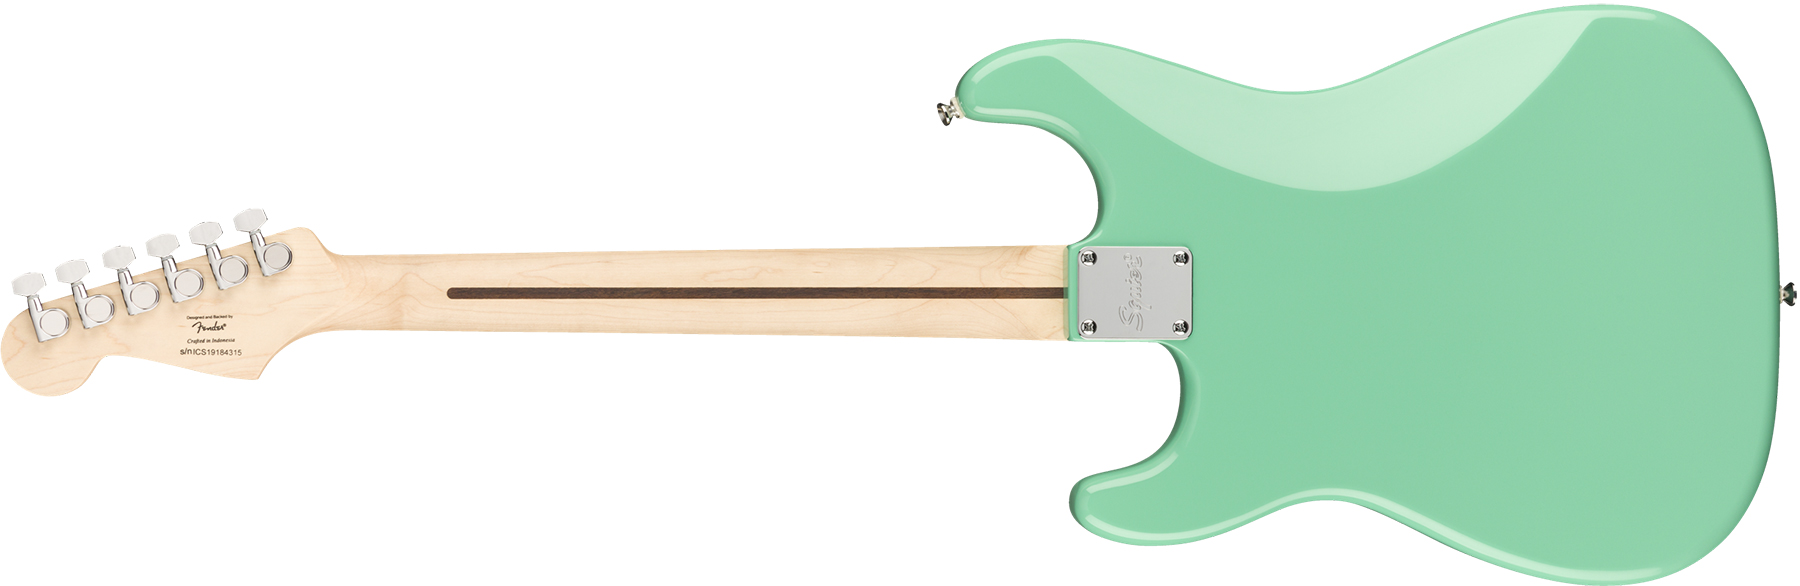 Squier Strat Bullet Fsr Ltd Hss Ht Lau - Sea Foam Green - Elektrische gitaar in Str-vorm - Variation 1